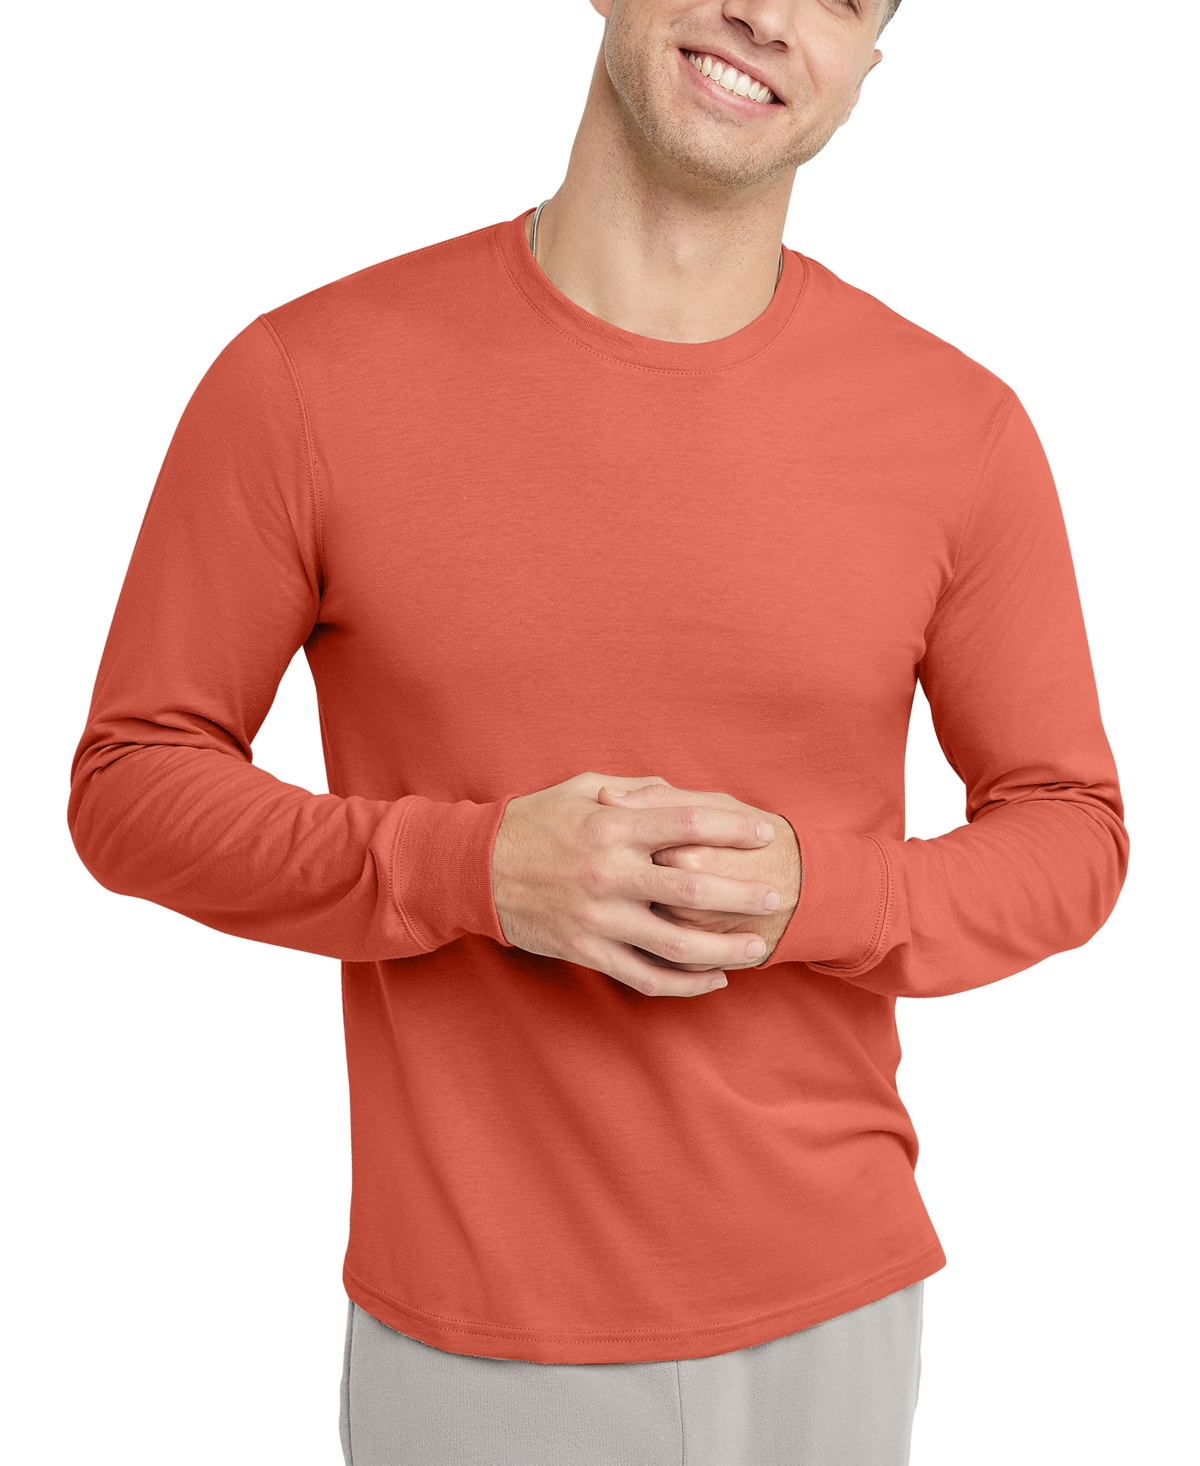 Men's Hanes Originals Cotton Long Sleeve T-shirt - Red River Clay